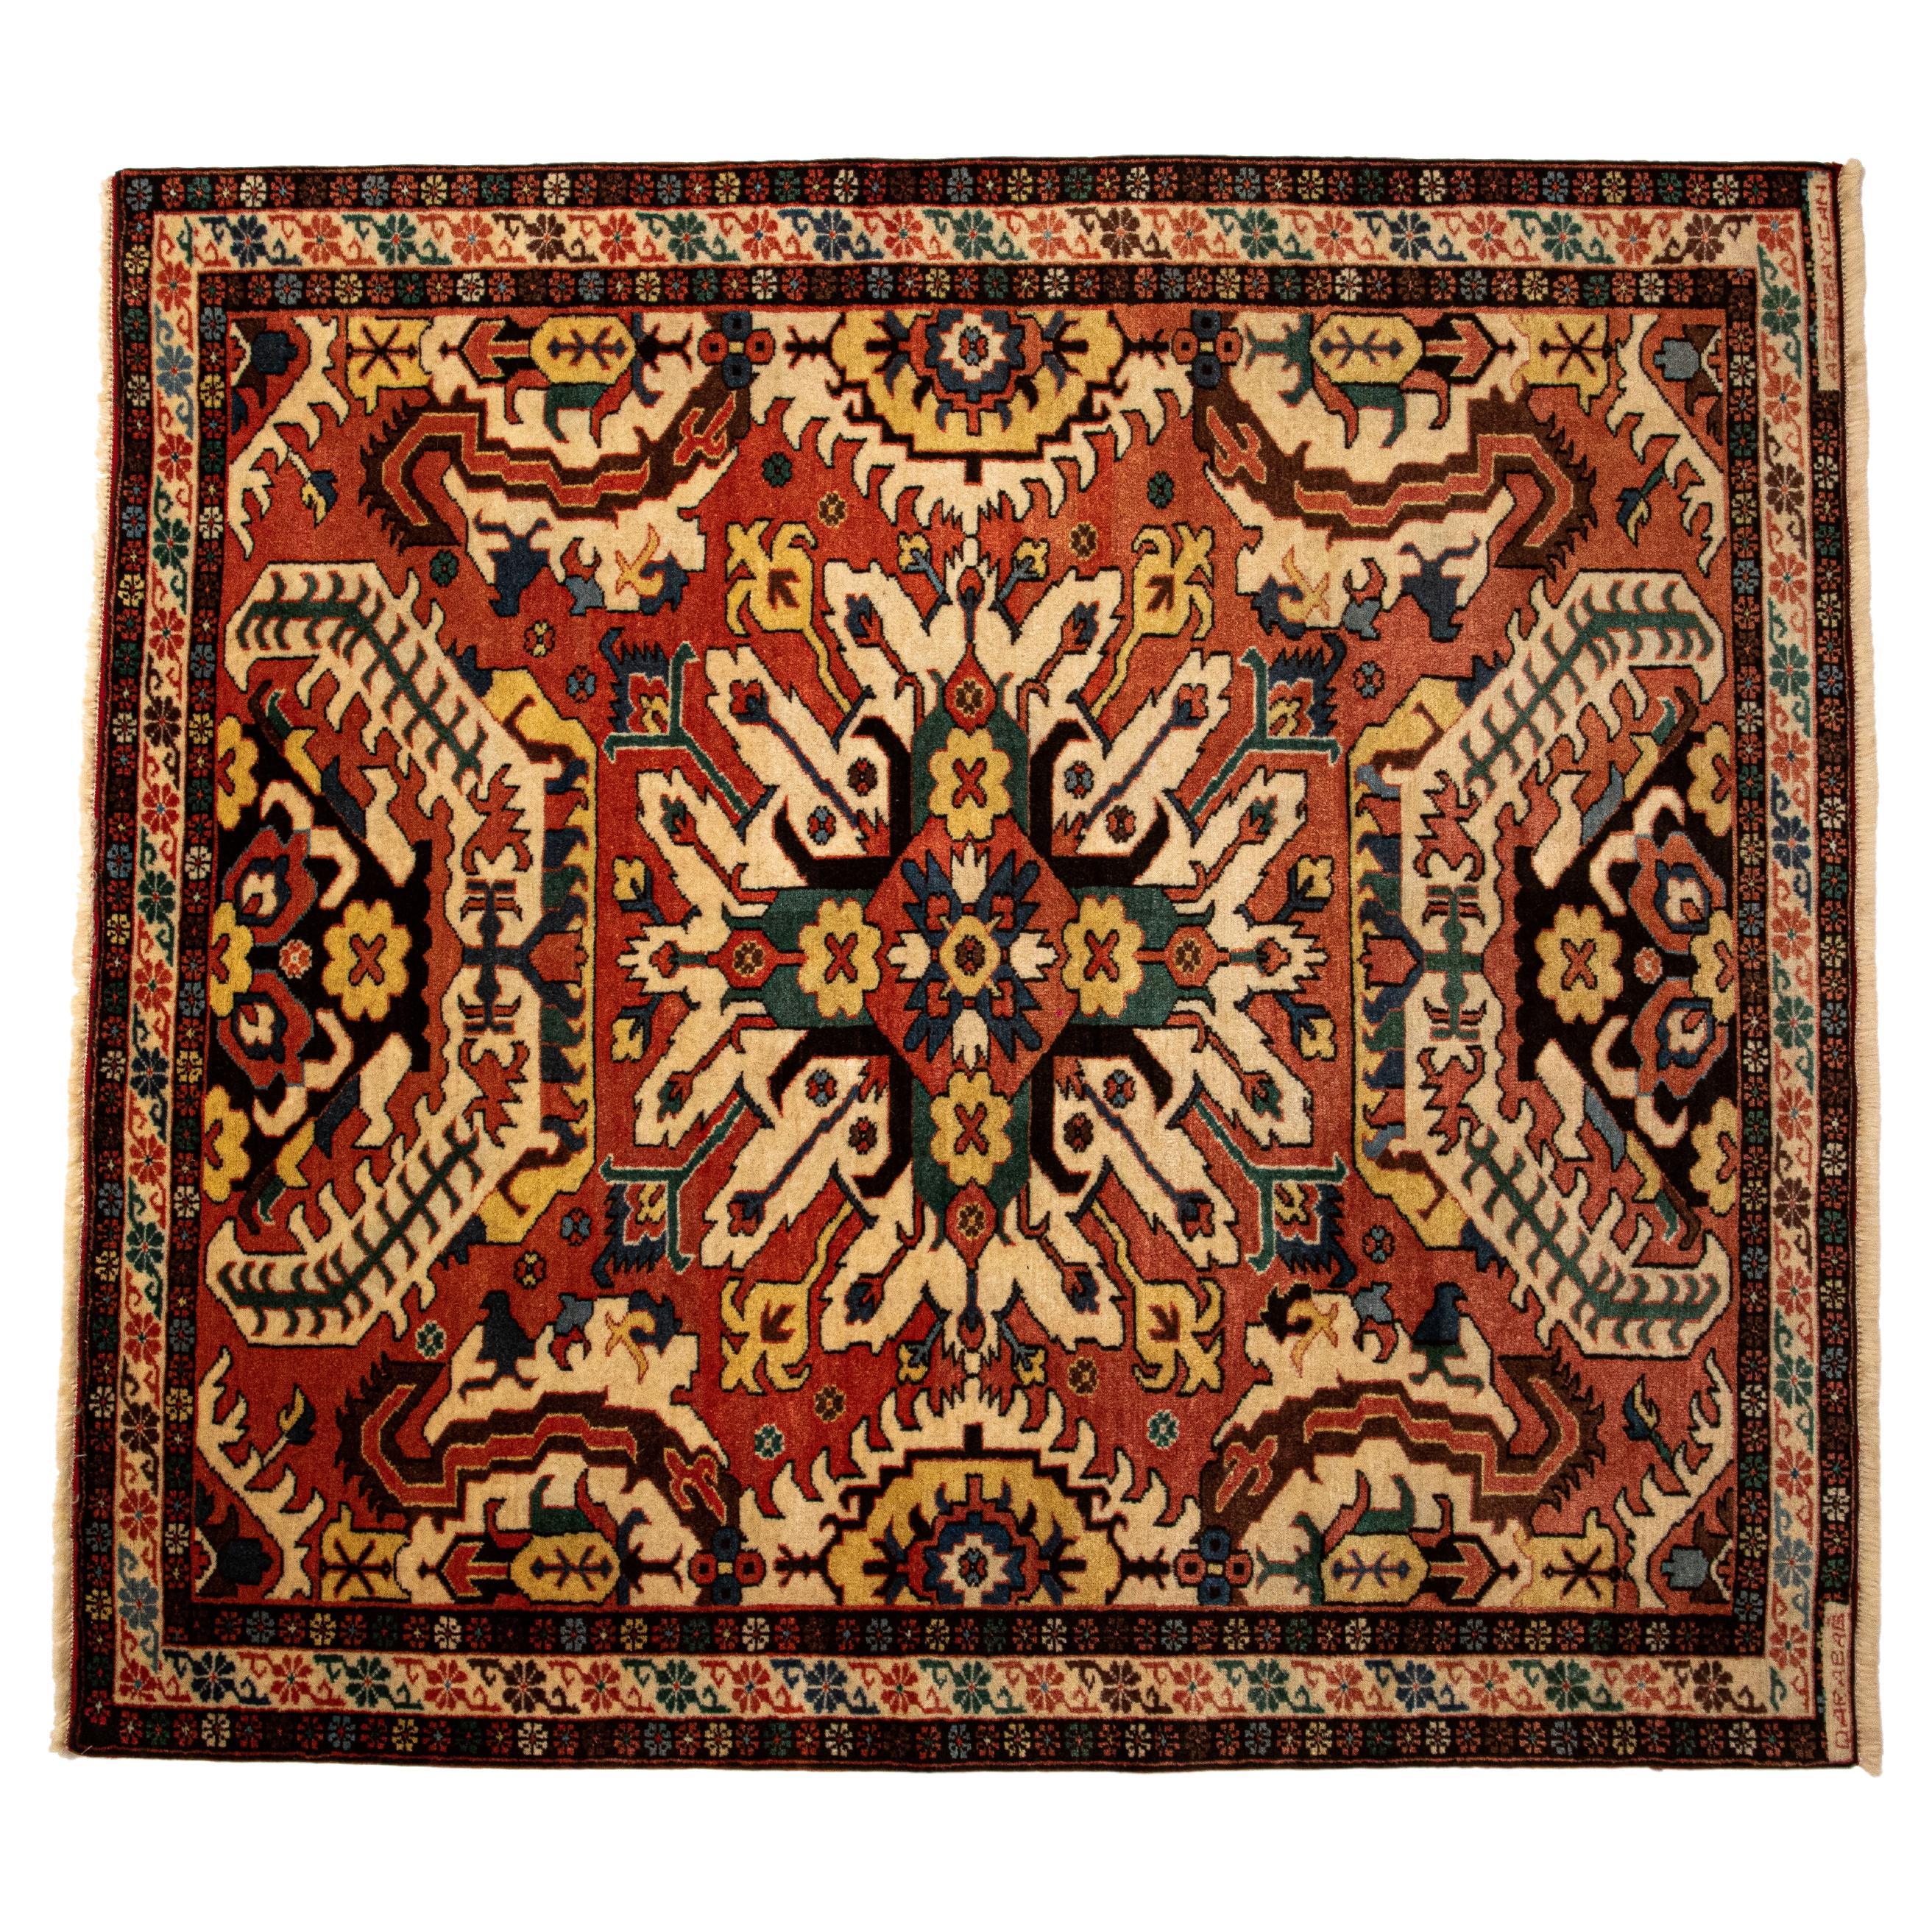 Museum curated Chelaberd “ Eagle Kazak “ traditional caucasian handmade carpet.